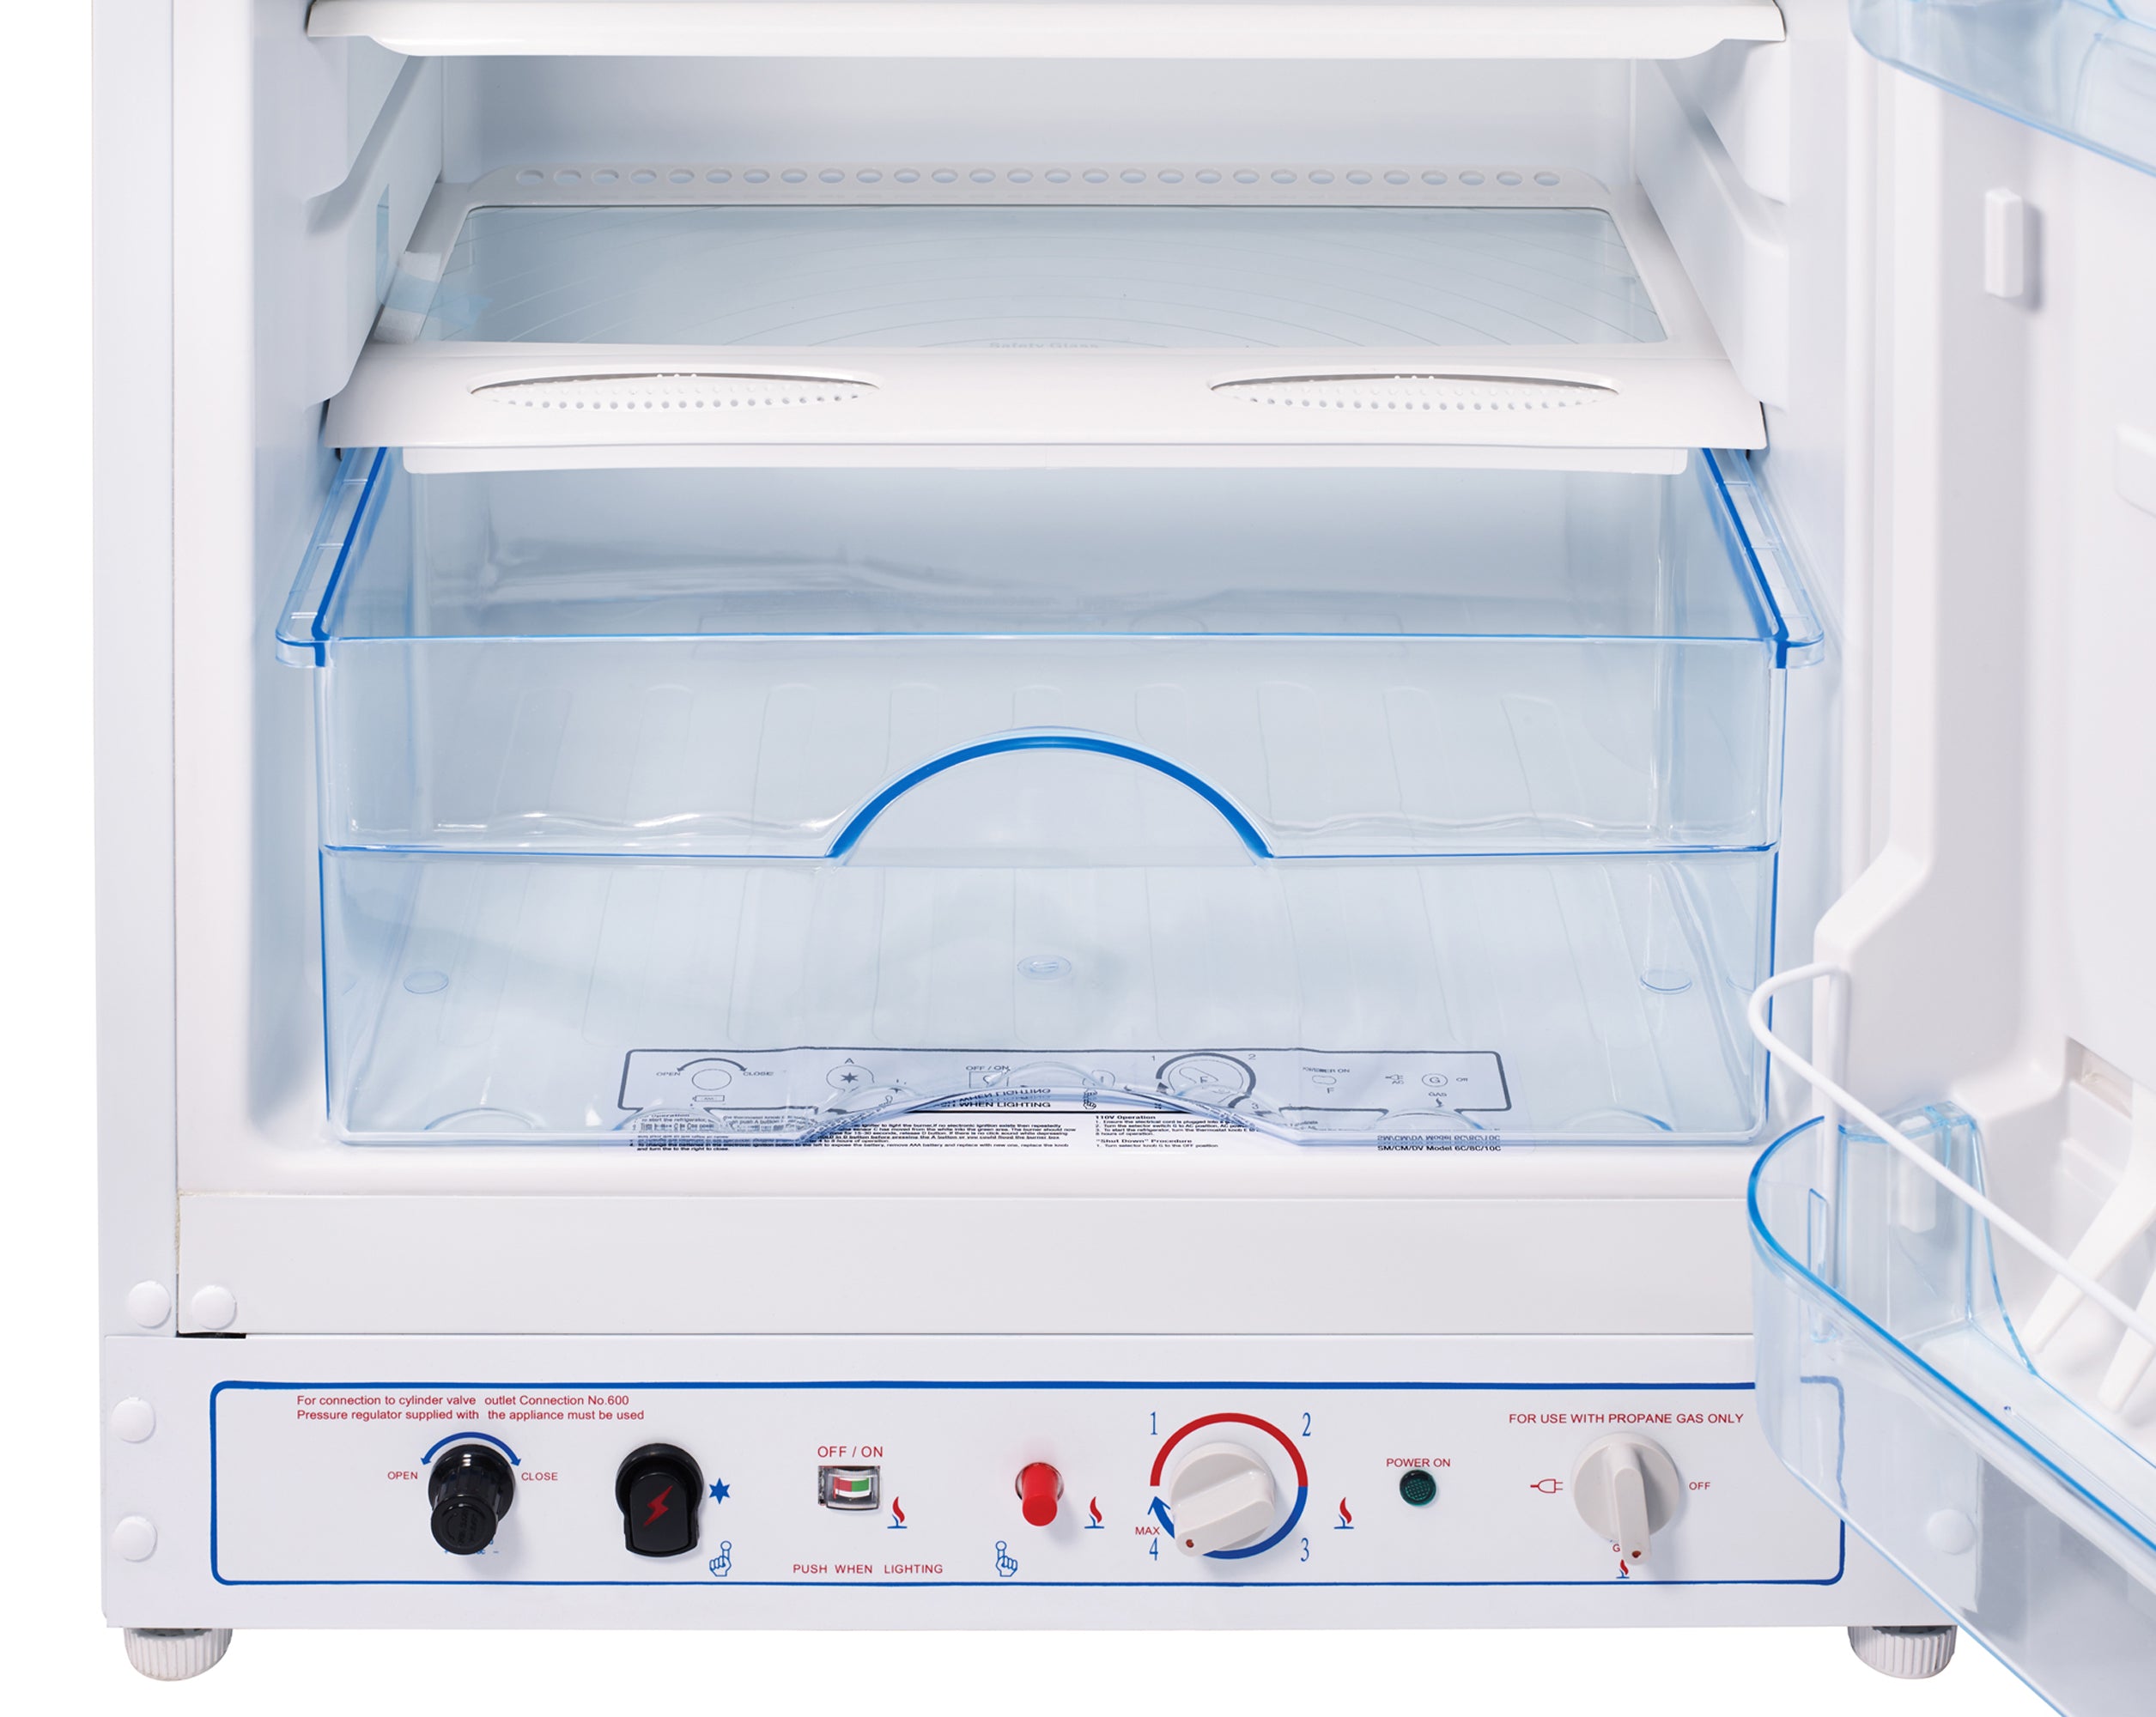 Unique Appliances - 23.5 Inch 10 cu. ft Top Mount Refrigerator in White - UGP-10C DV W